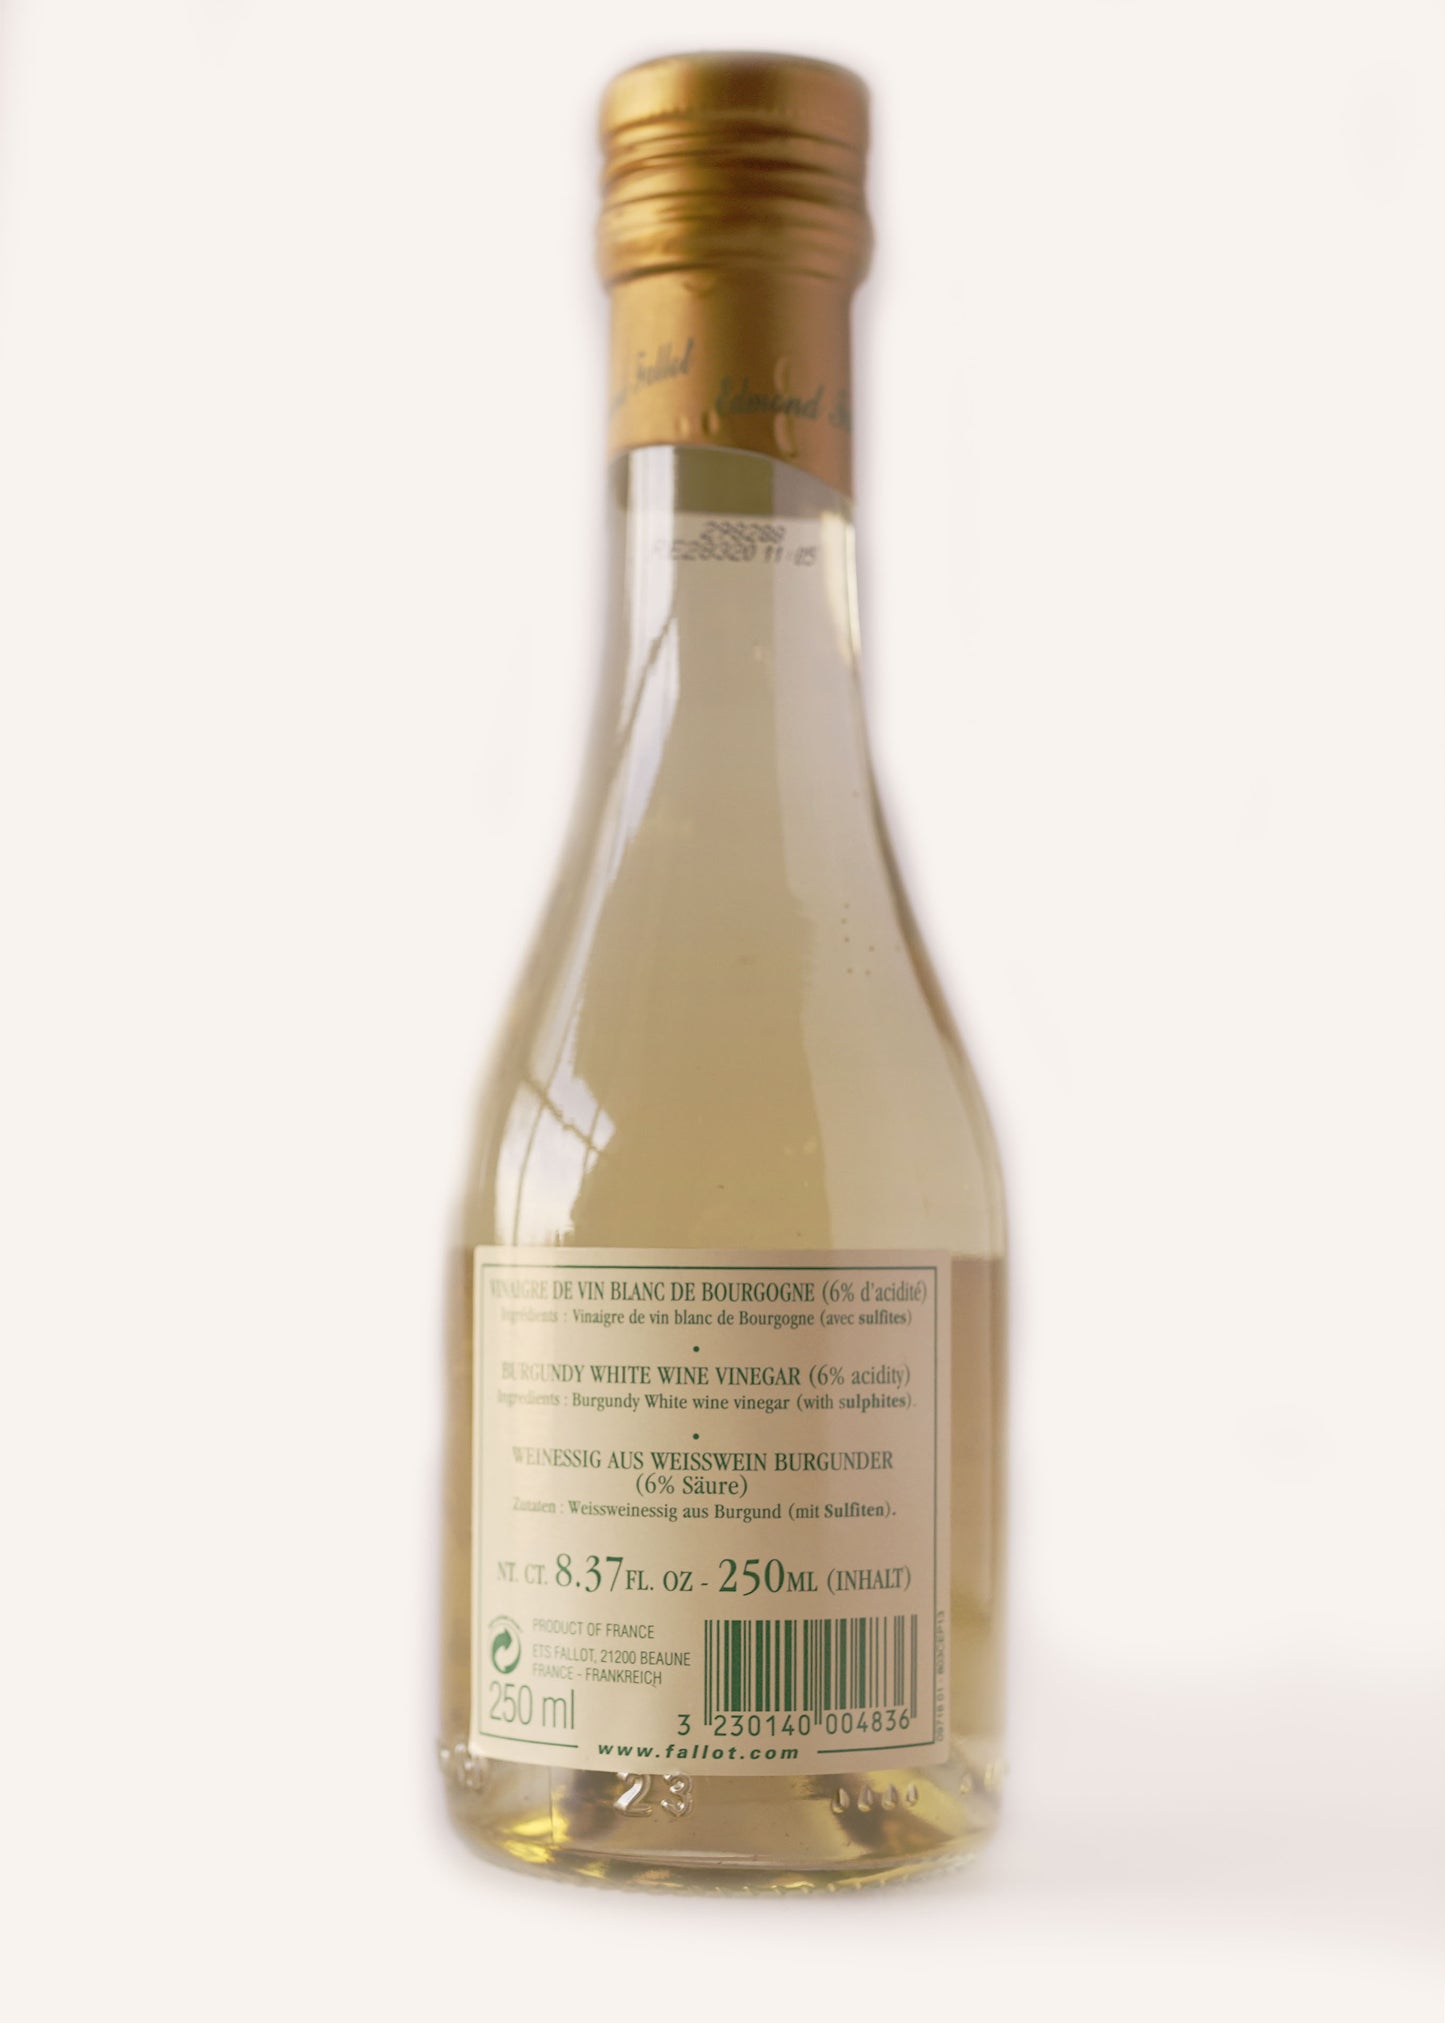 White Wine Vinegar